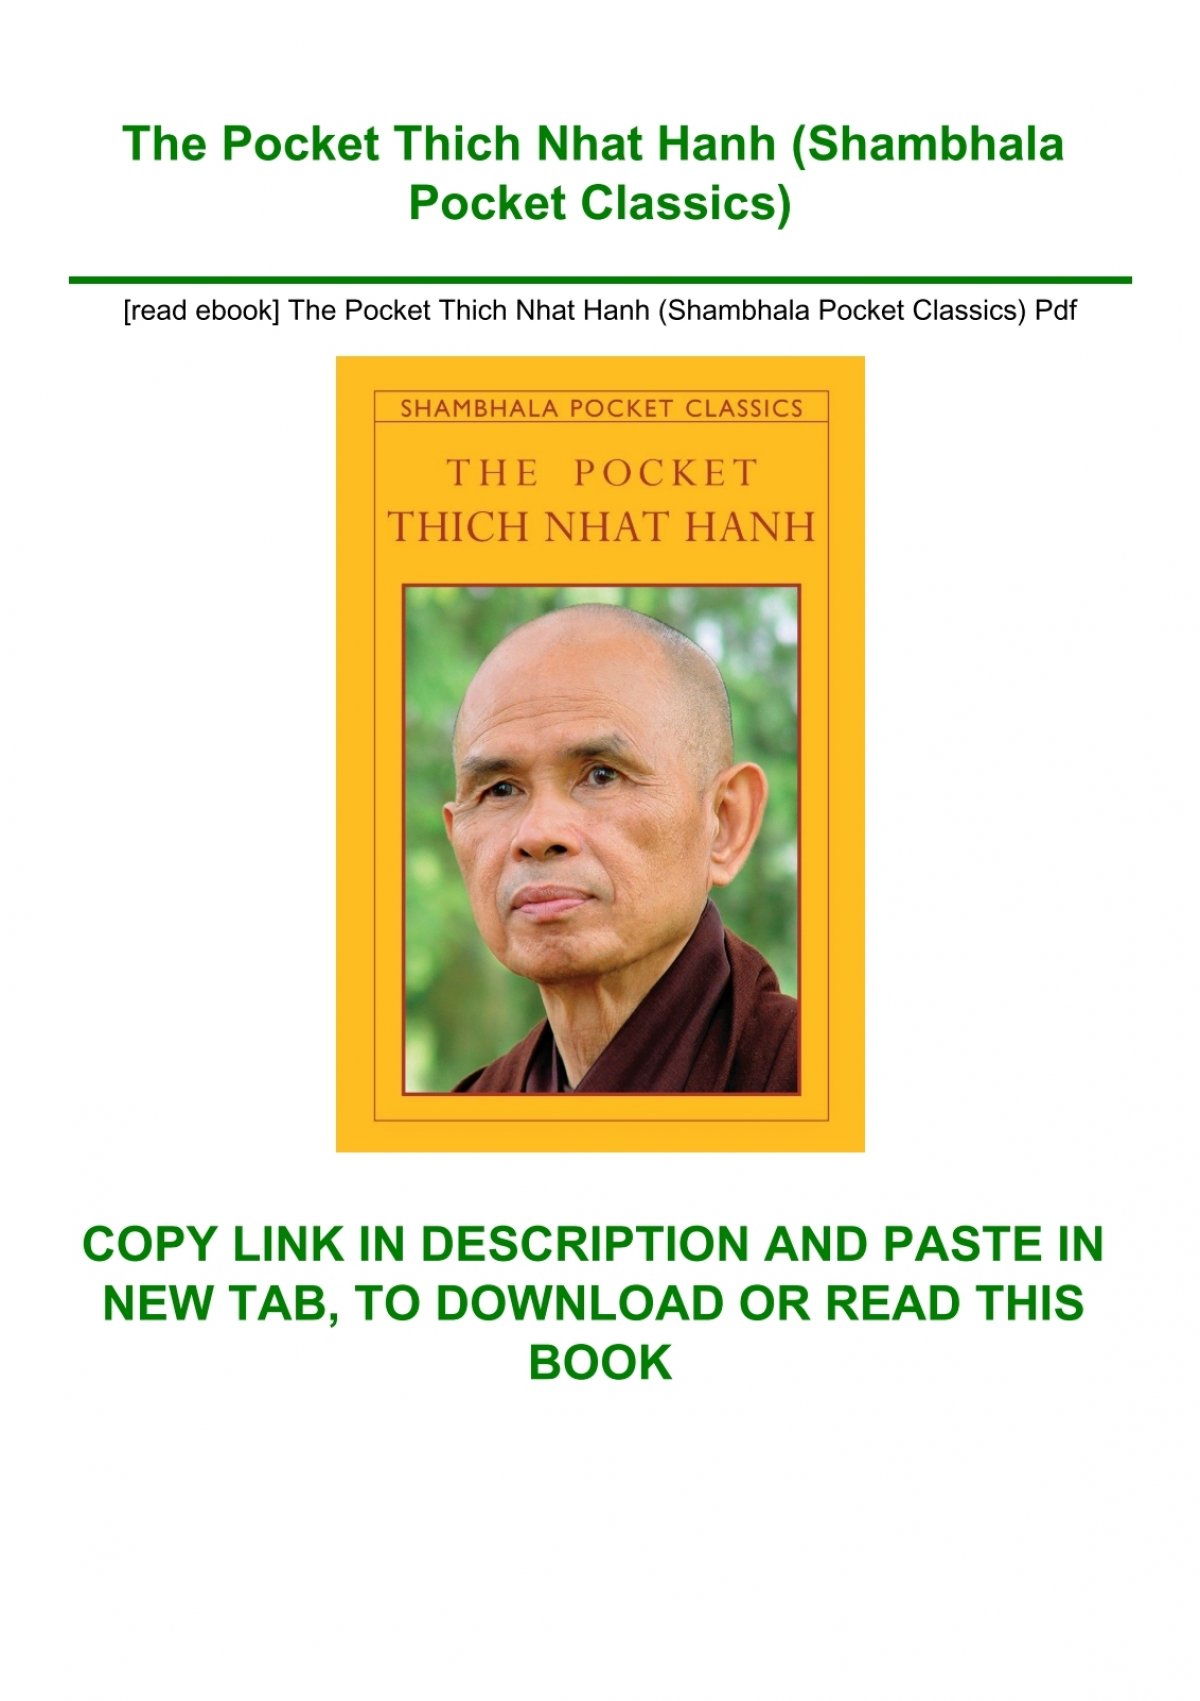 The Pocket Thich Nhat Hanh (Shambhala Pocket Classics)